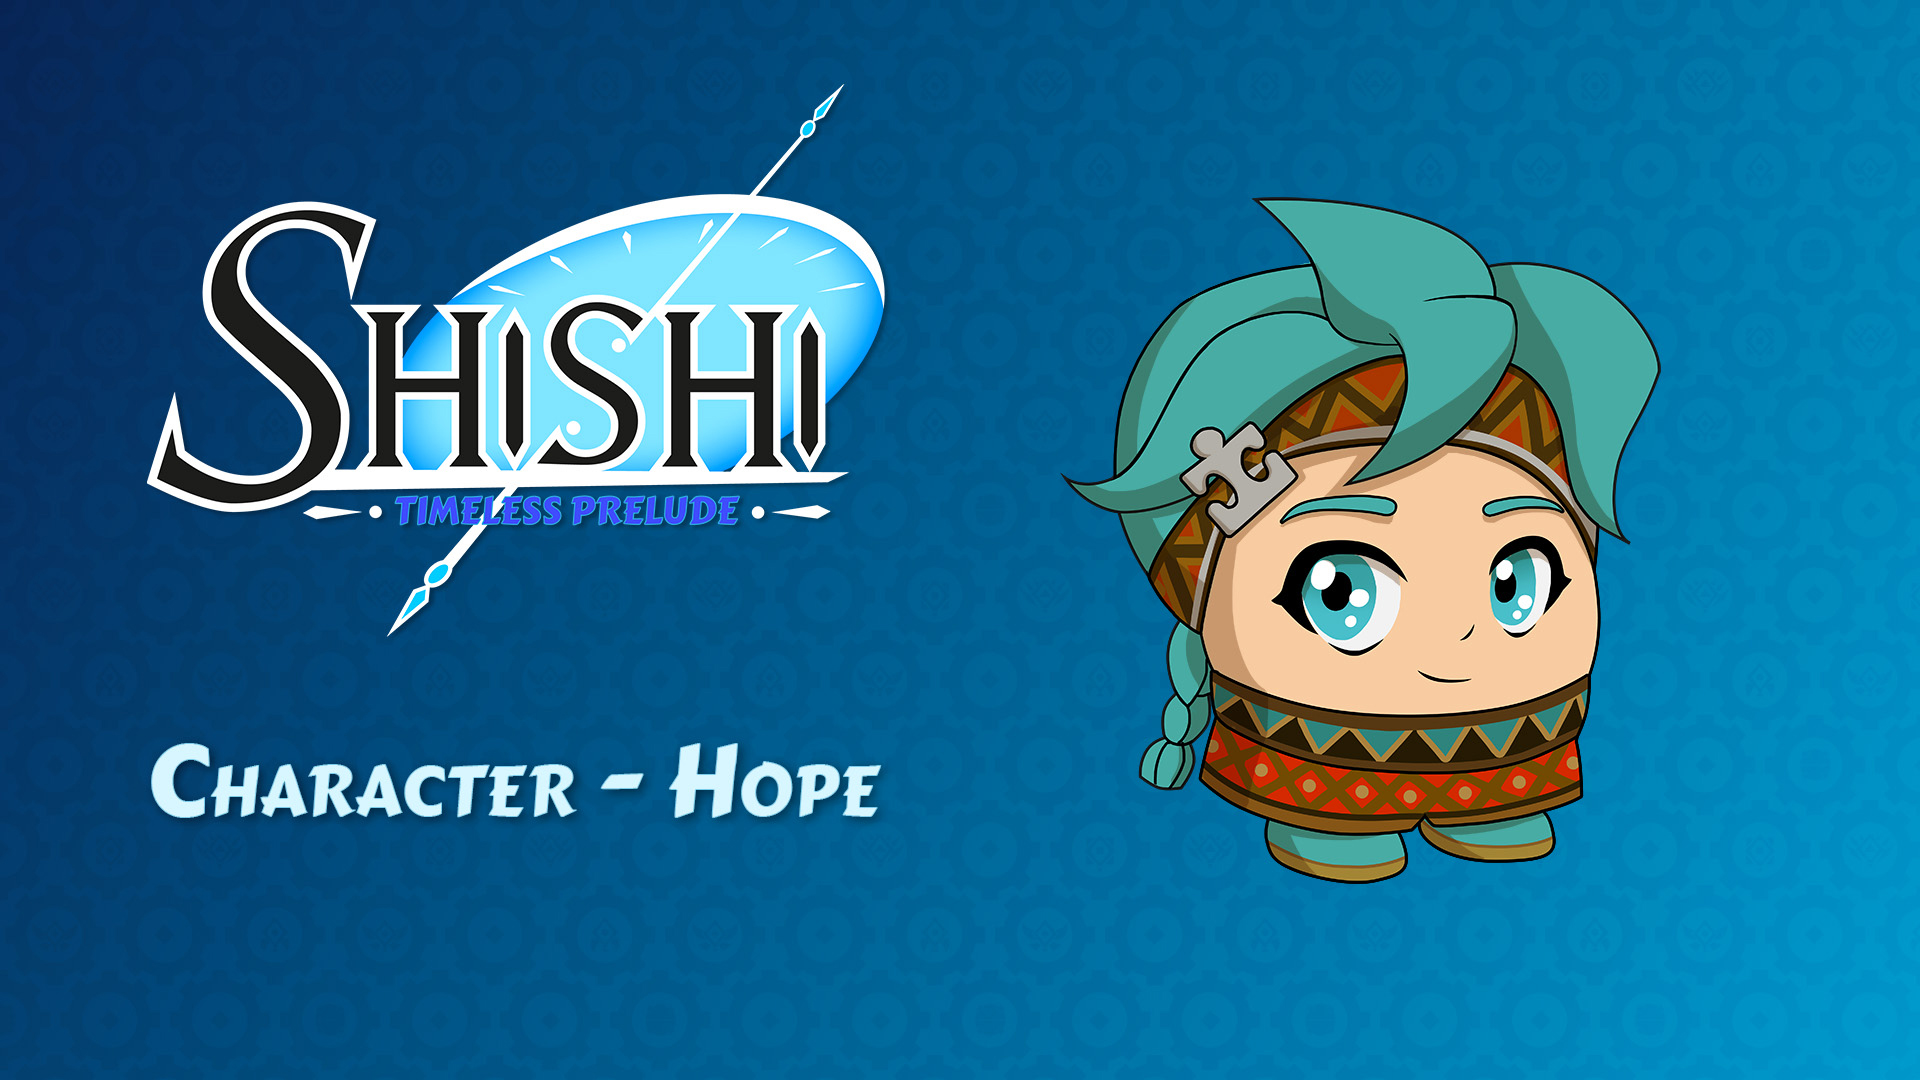 Character - Hope